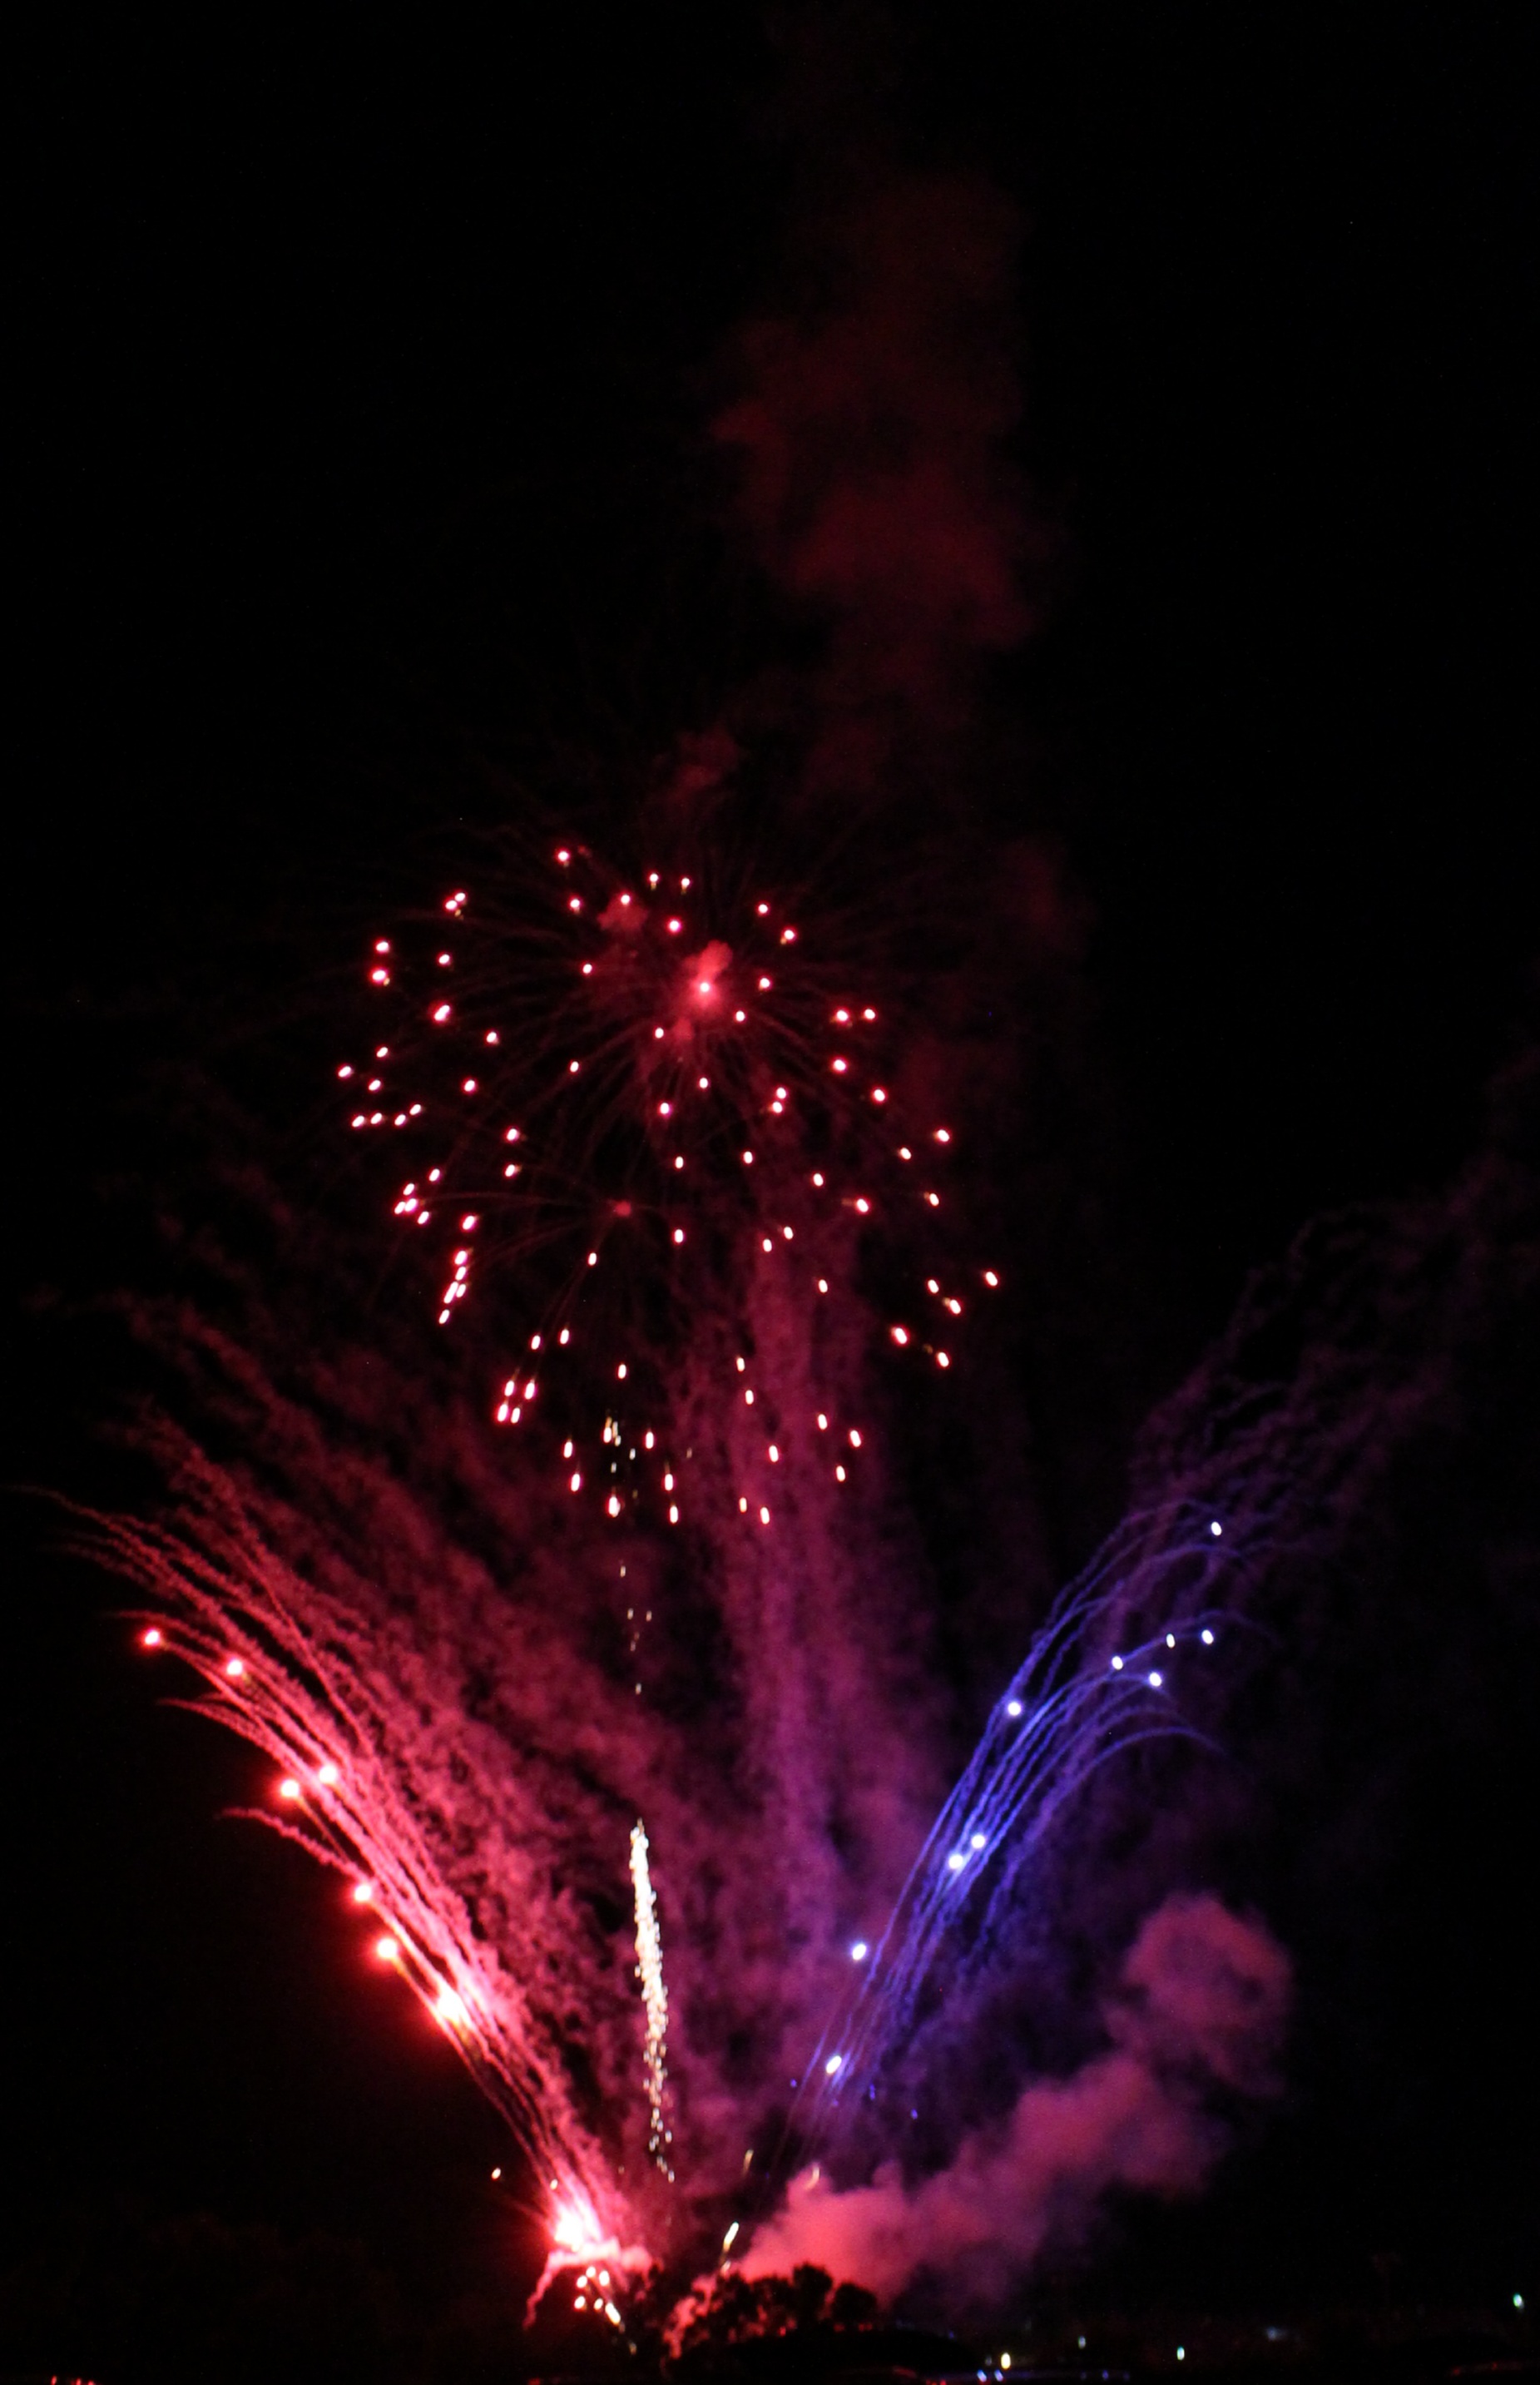 Fireworks display seconews.org 